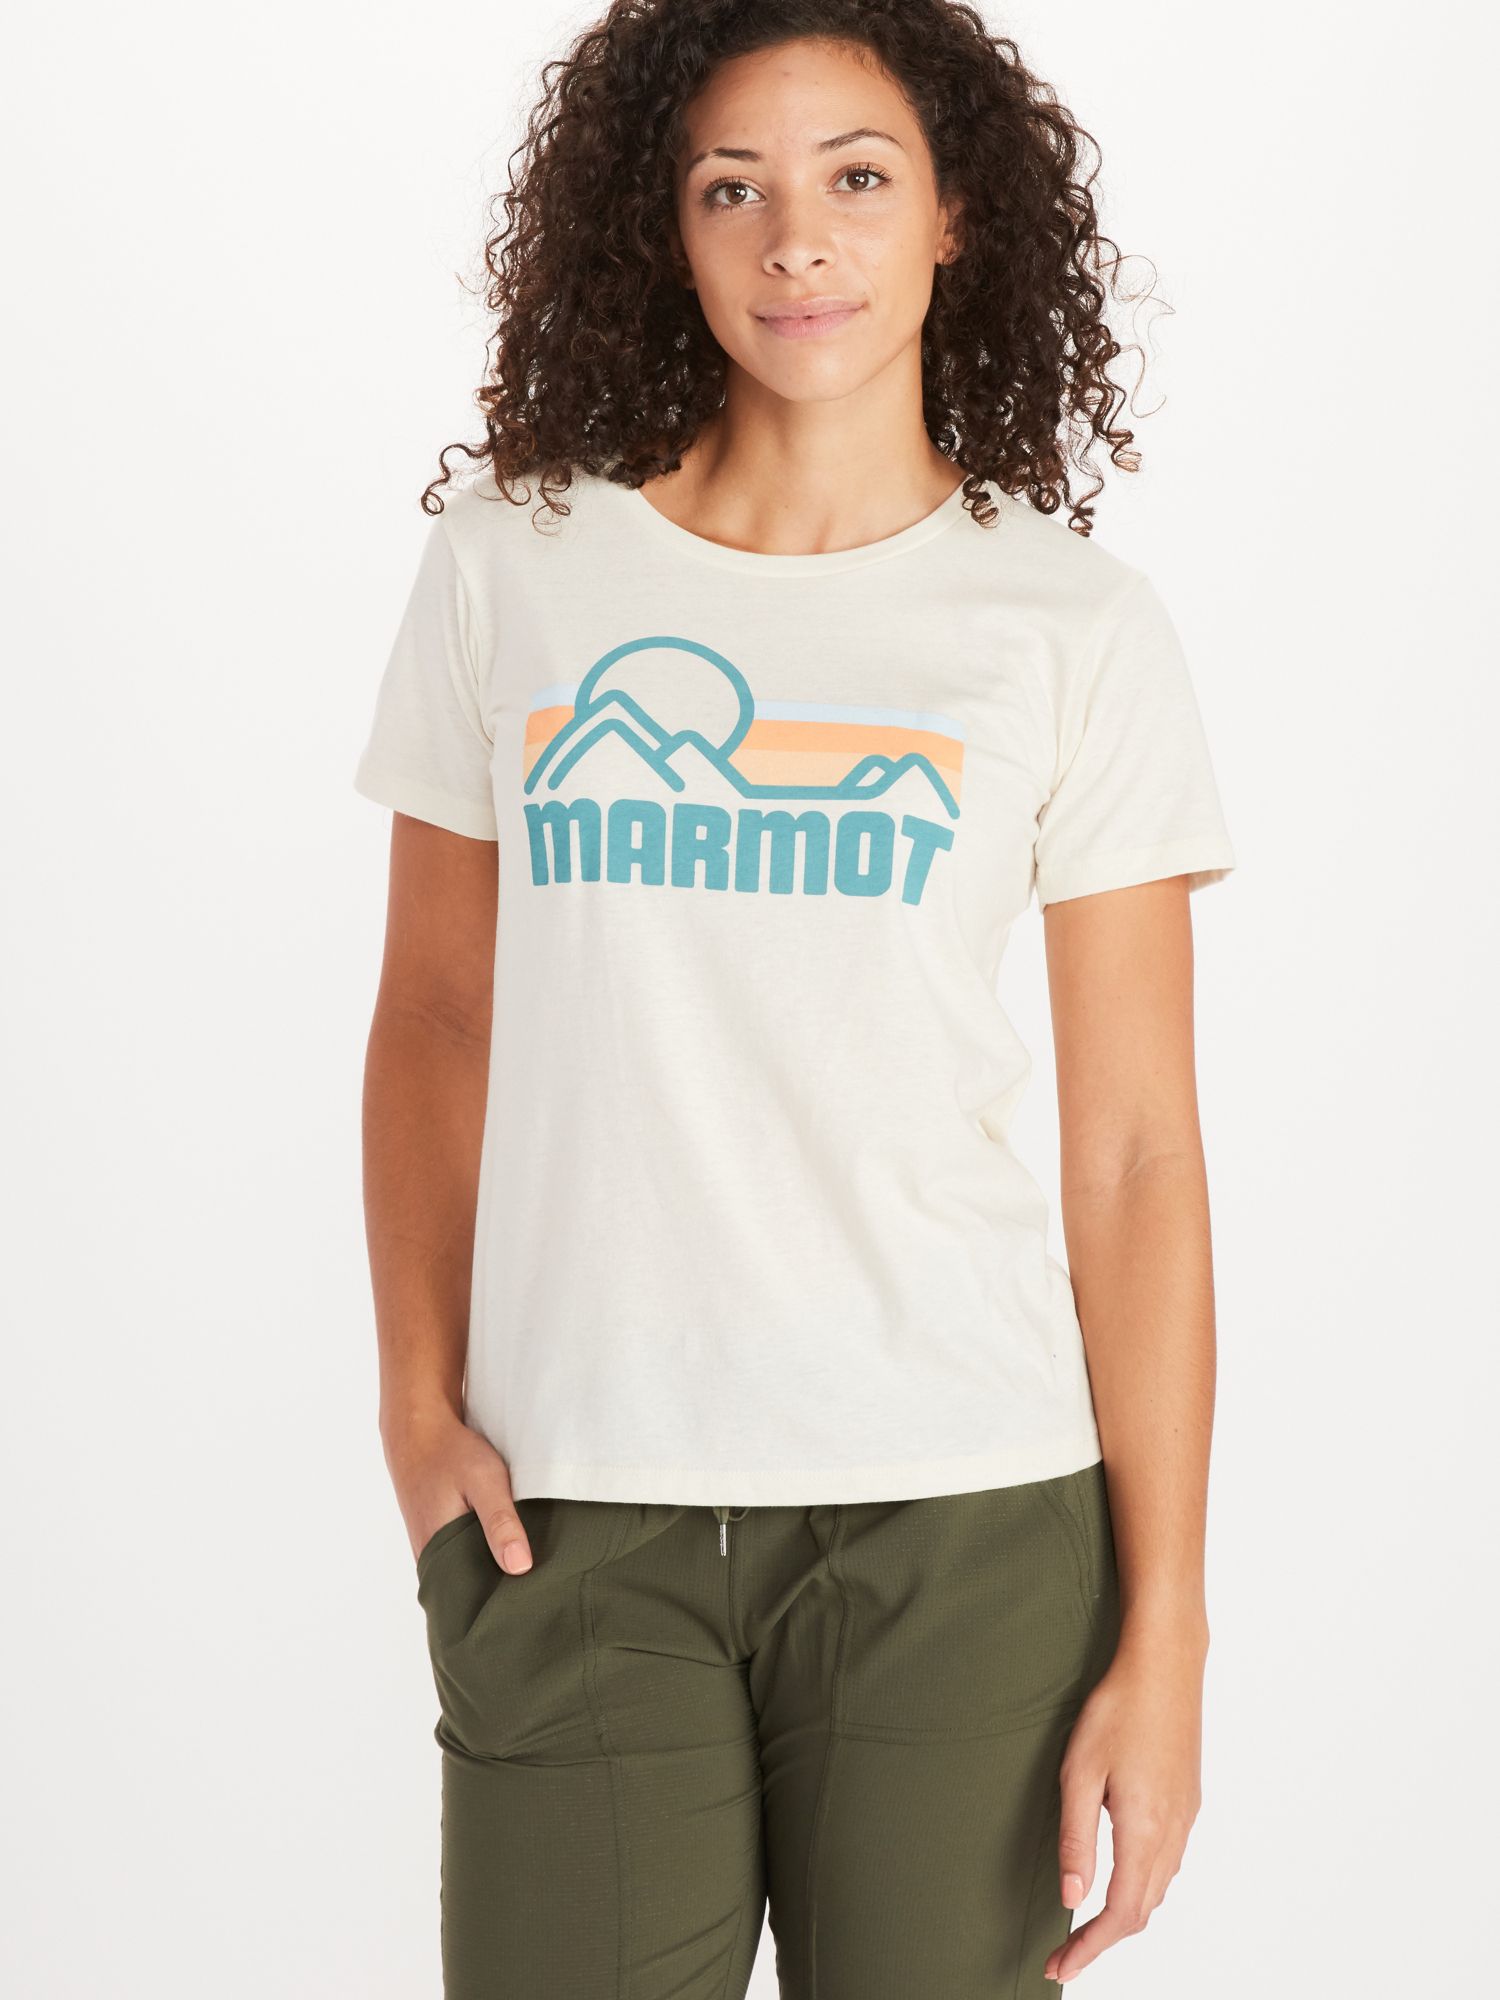 Sale Women's Tops & Shirts | Marmot